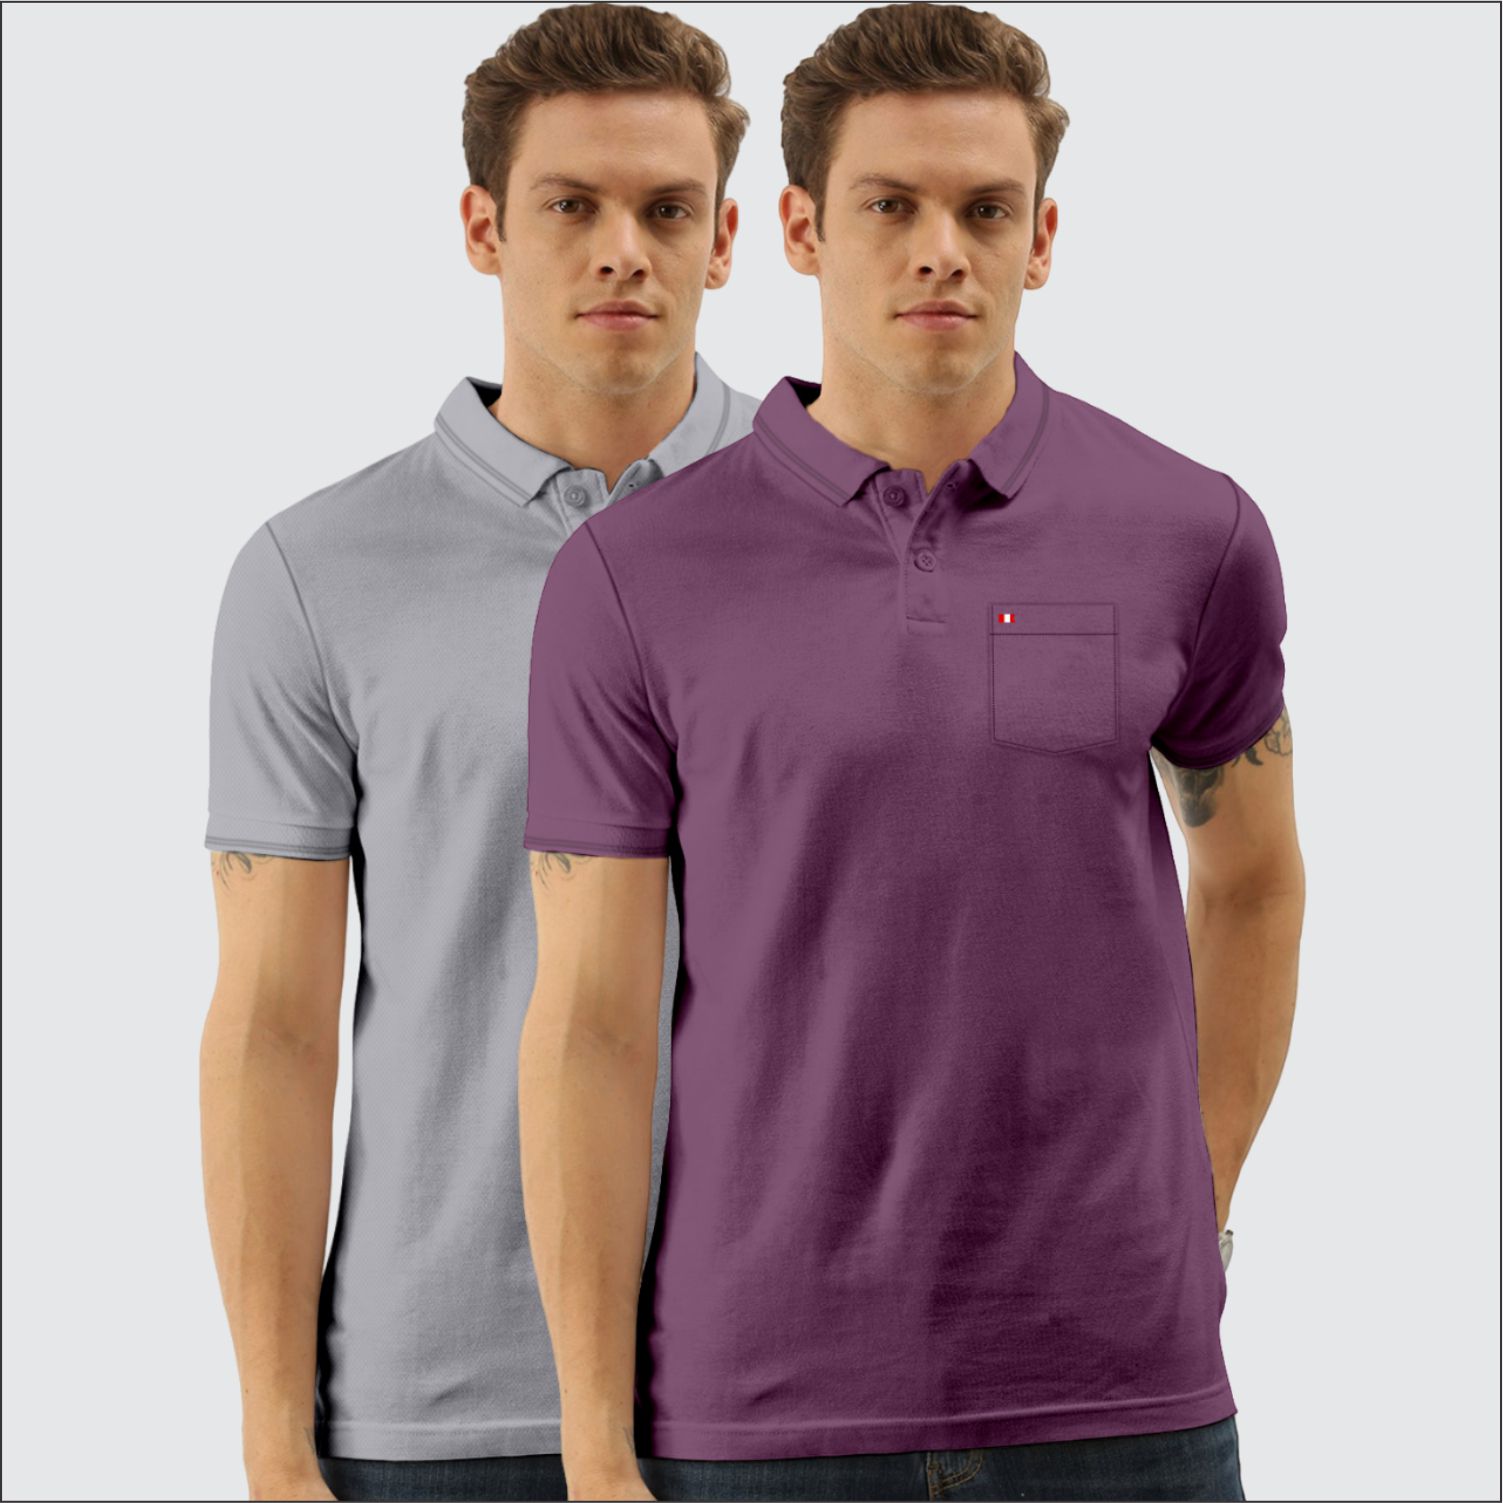     			TAB91 Cotton Blend Slim Fit Solid Half Sleeves Men's Polo T Shirt - Melange Grey ( Pack of 2 )